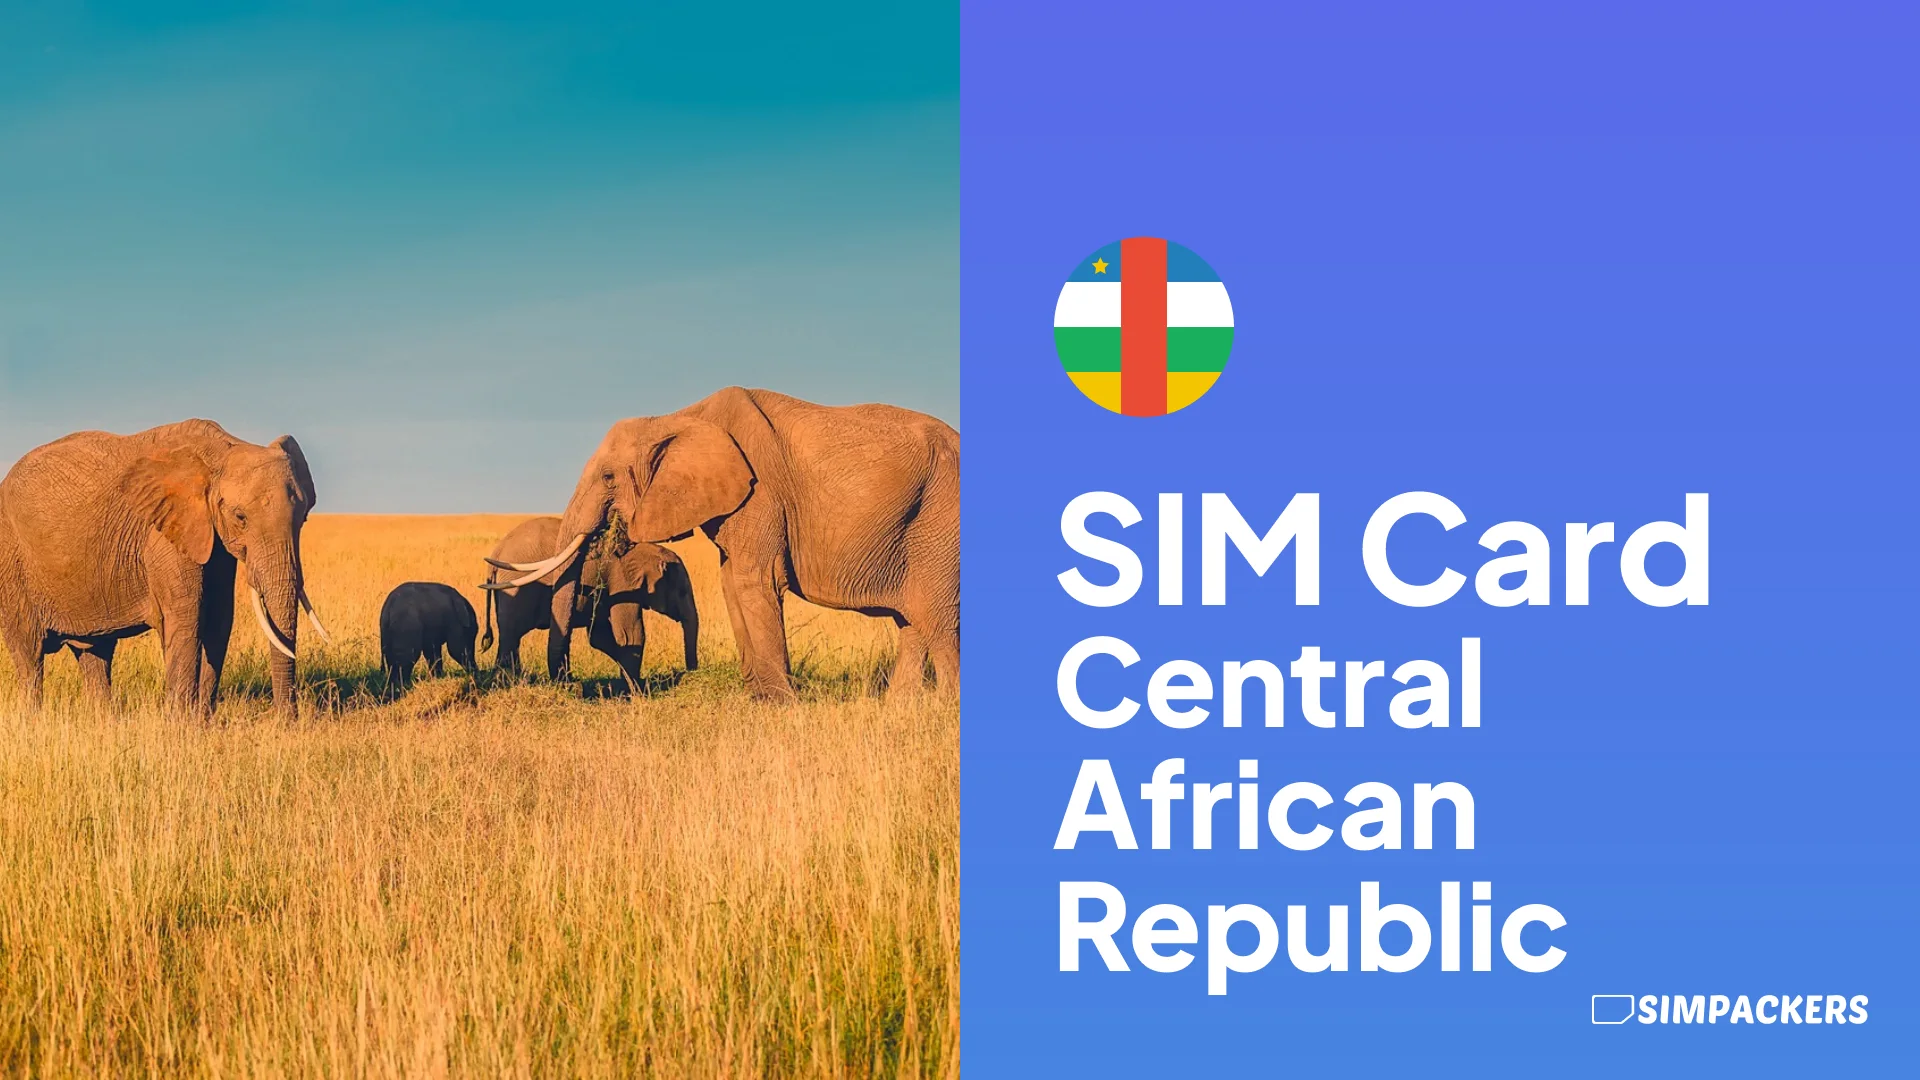 EN/FEATURED_IMAGES/sim-card-central-african-republic.webp